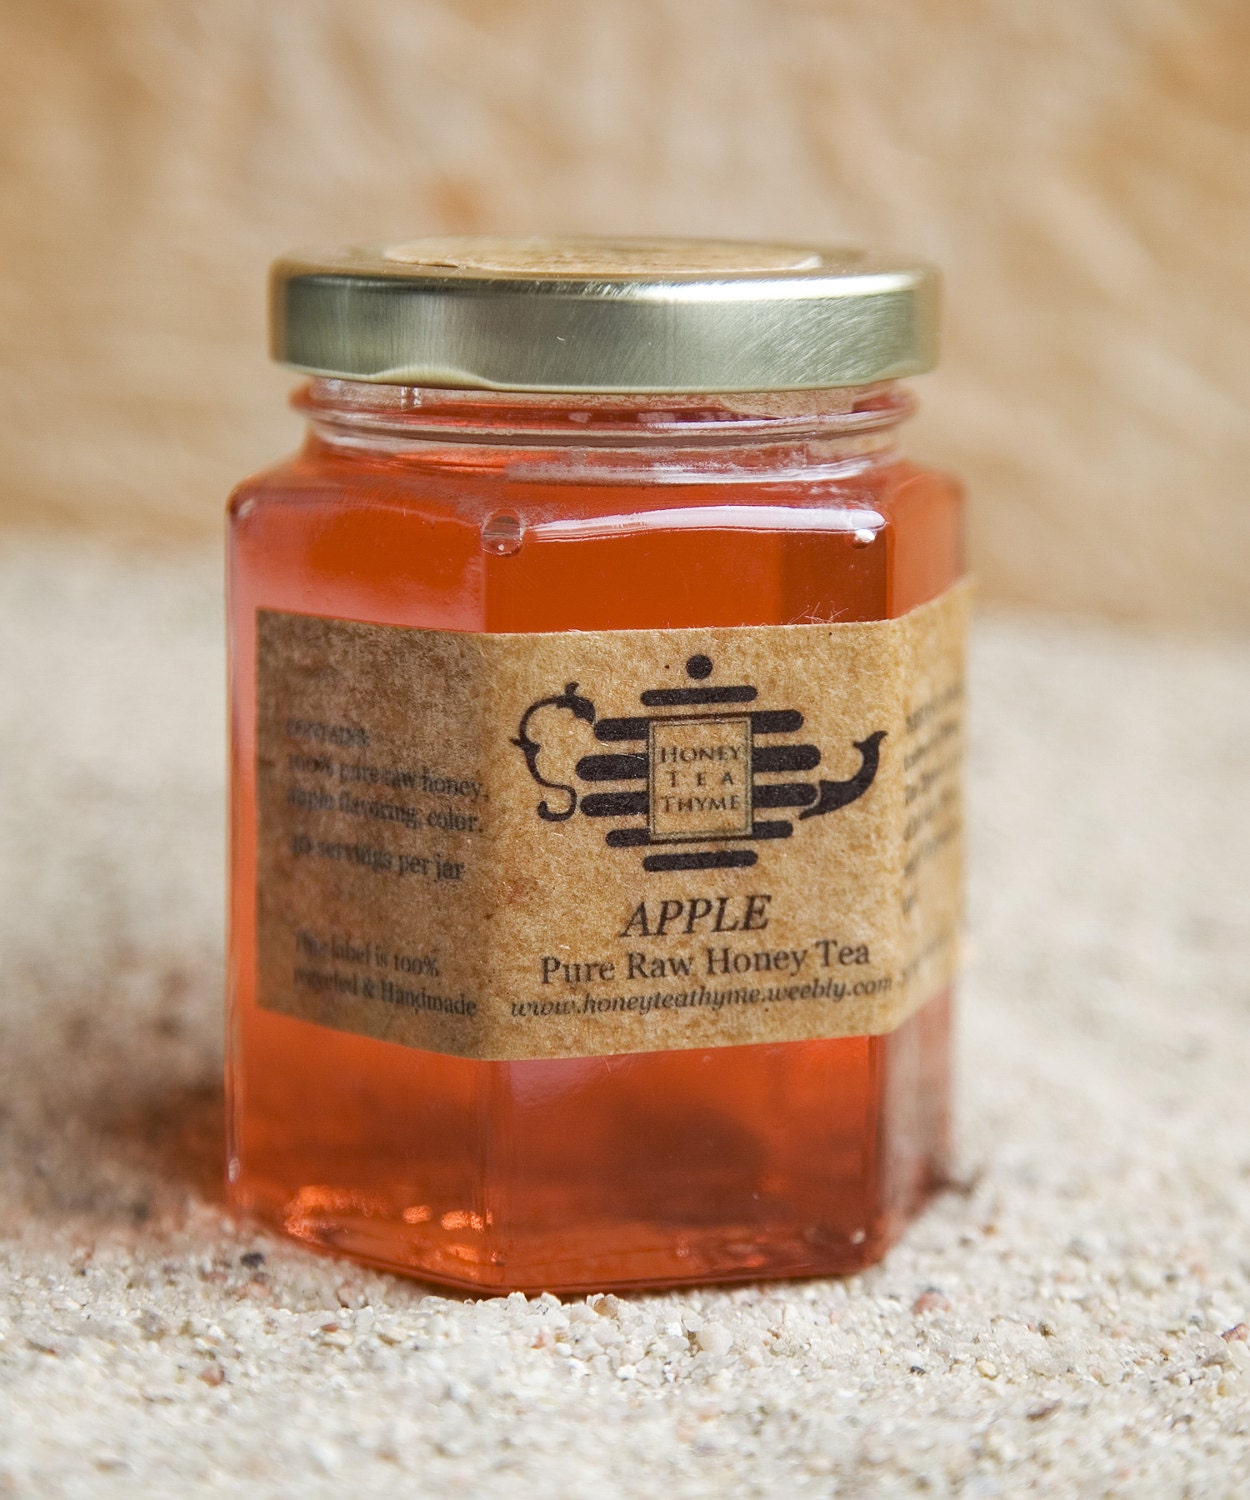 Pure Raw Honey Tea APPLE flavored 8 oz - honeyteathyme